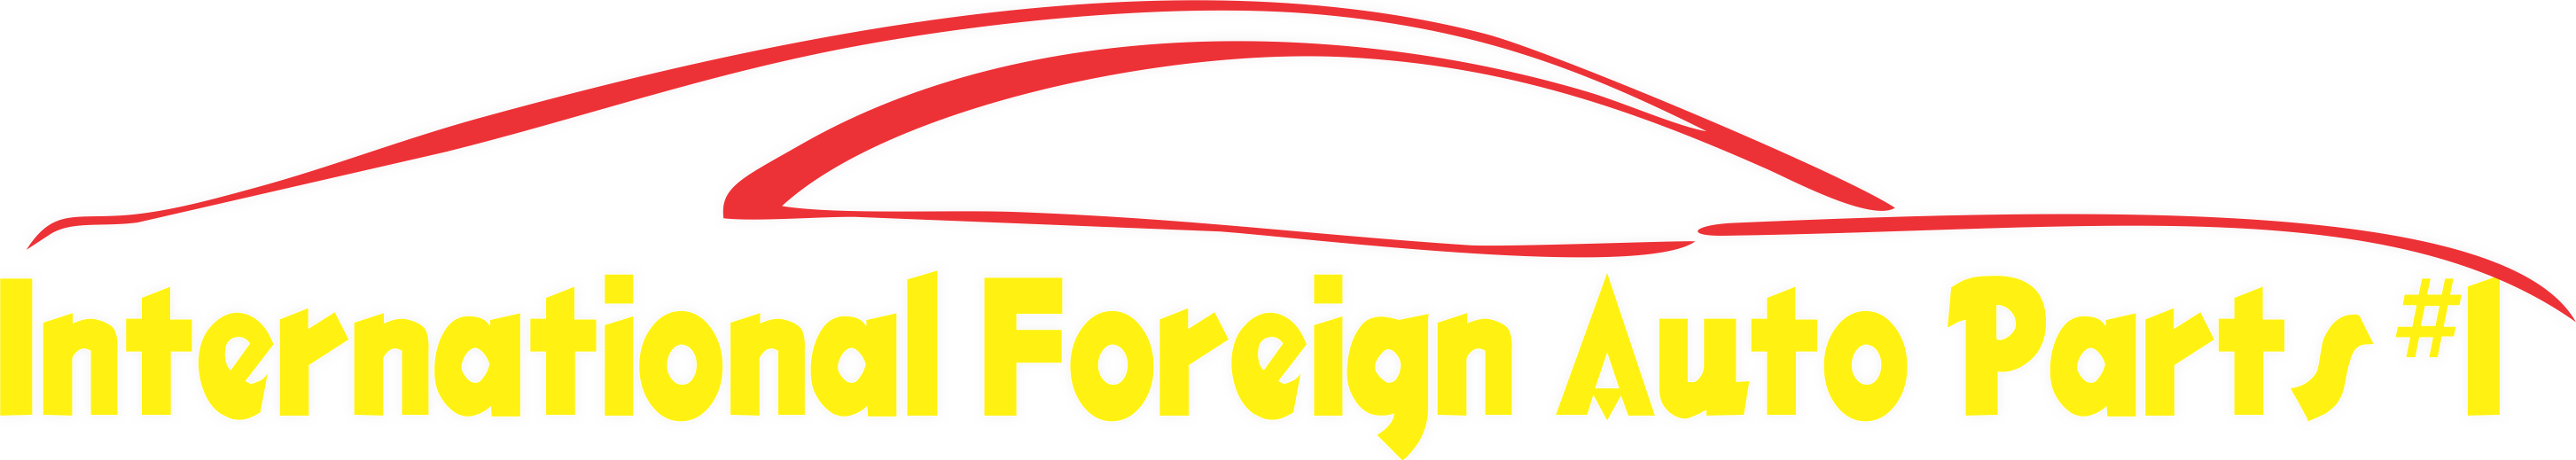 International Foreign Auto Parts